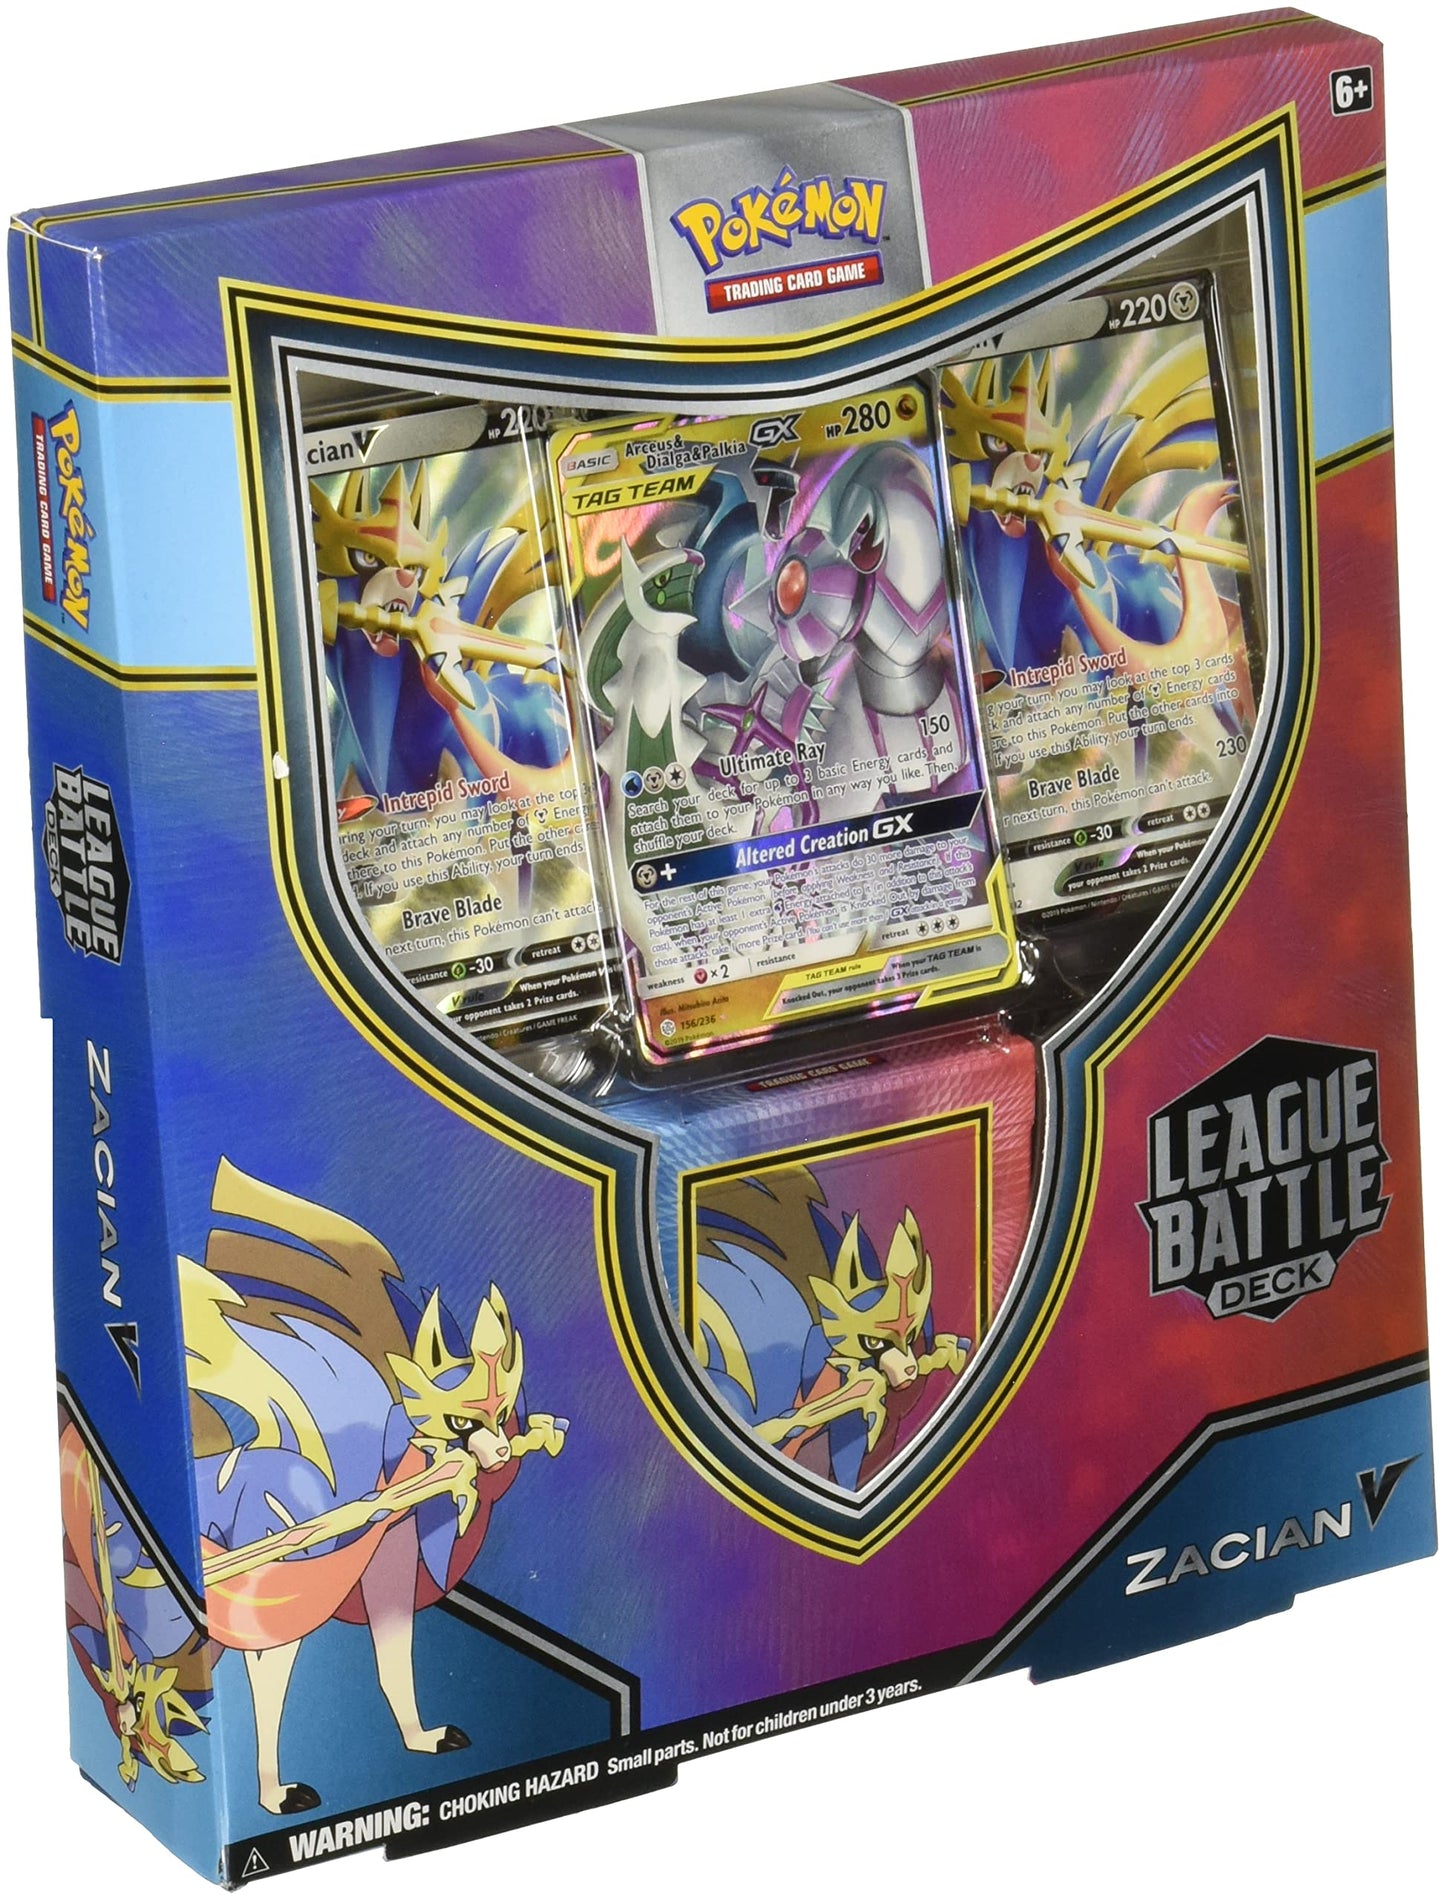 Pokemon TCG: Zacian V League Battle Deck, Multicolor